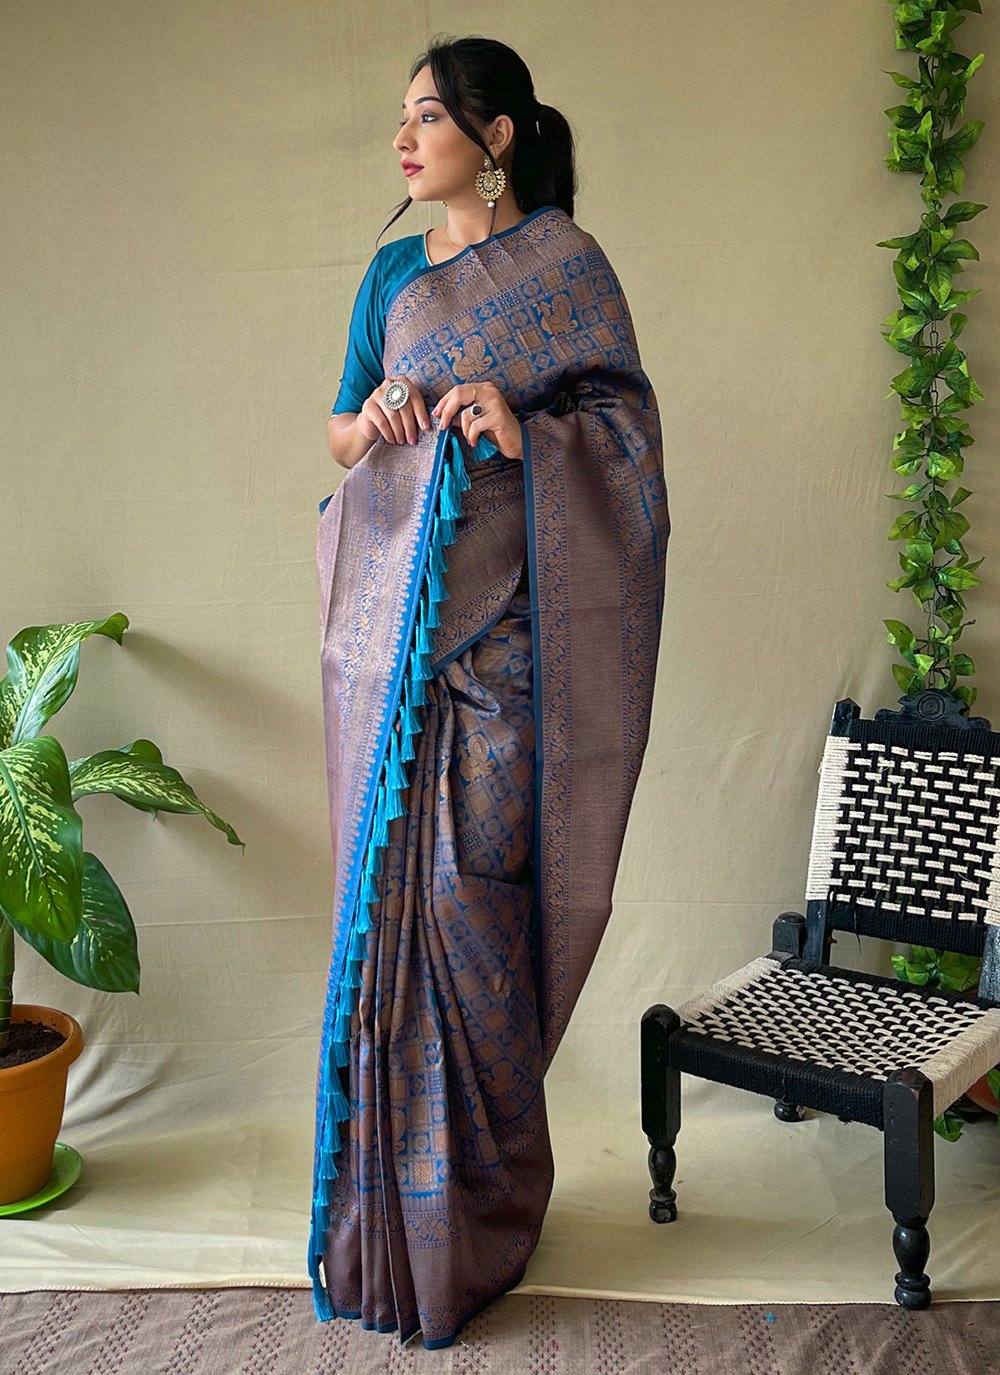 A penchant for Chiffons - The Maharani who glamourised silk-chiffon sarees,  Maharani Indira Devi of Cooch Behar, Chiffon sarees, Ladies fashion